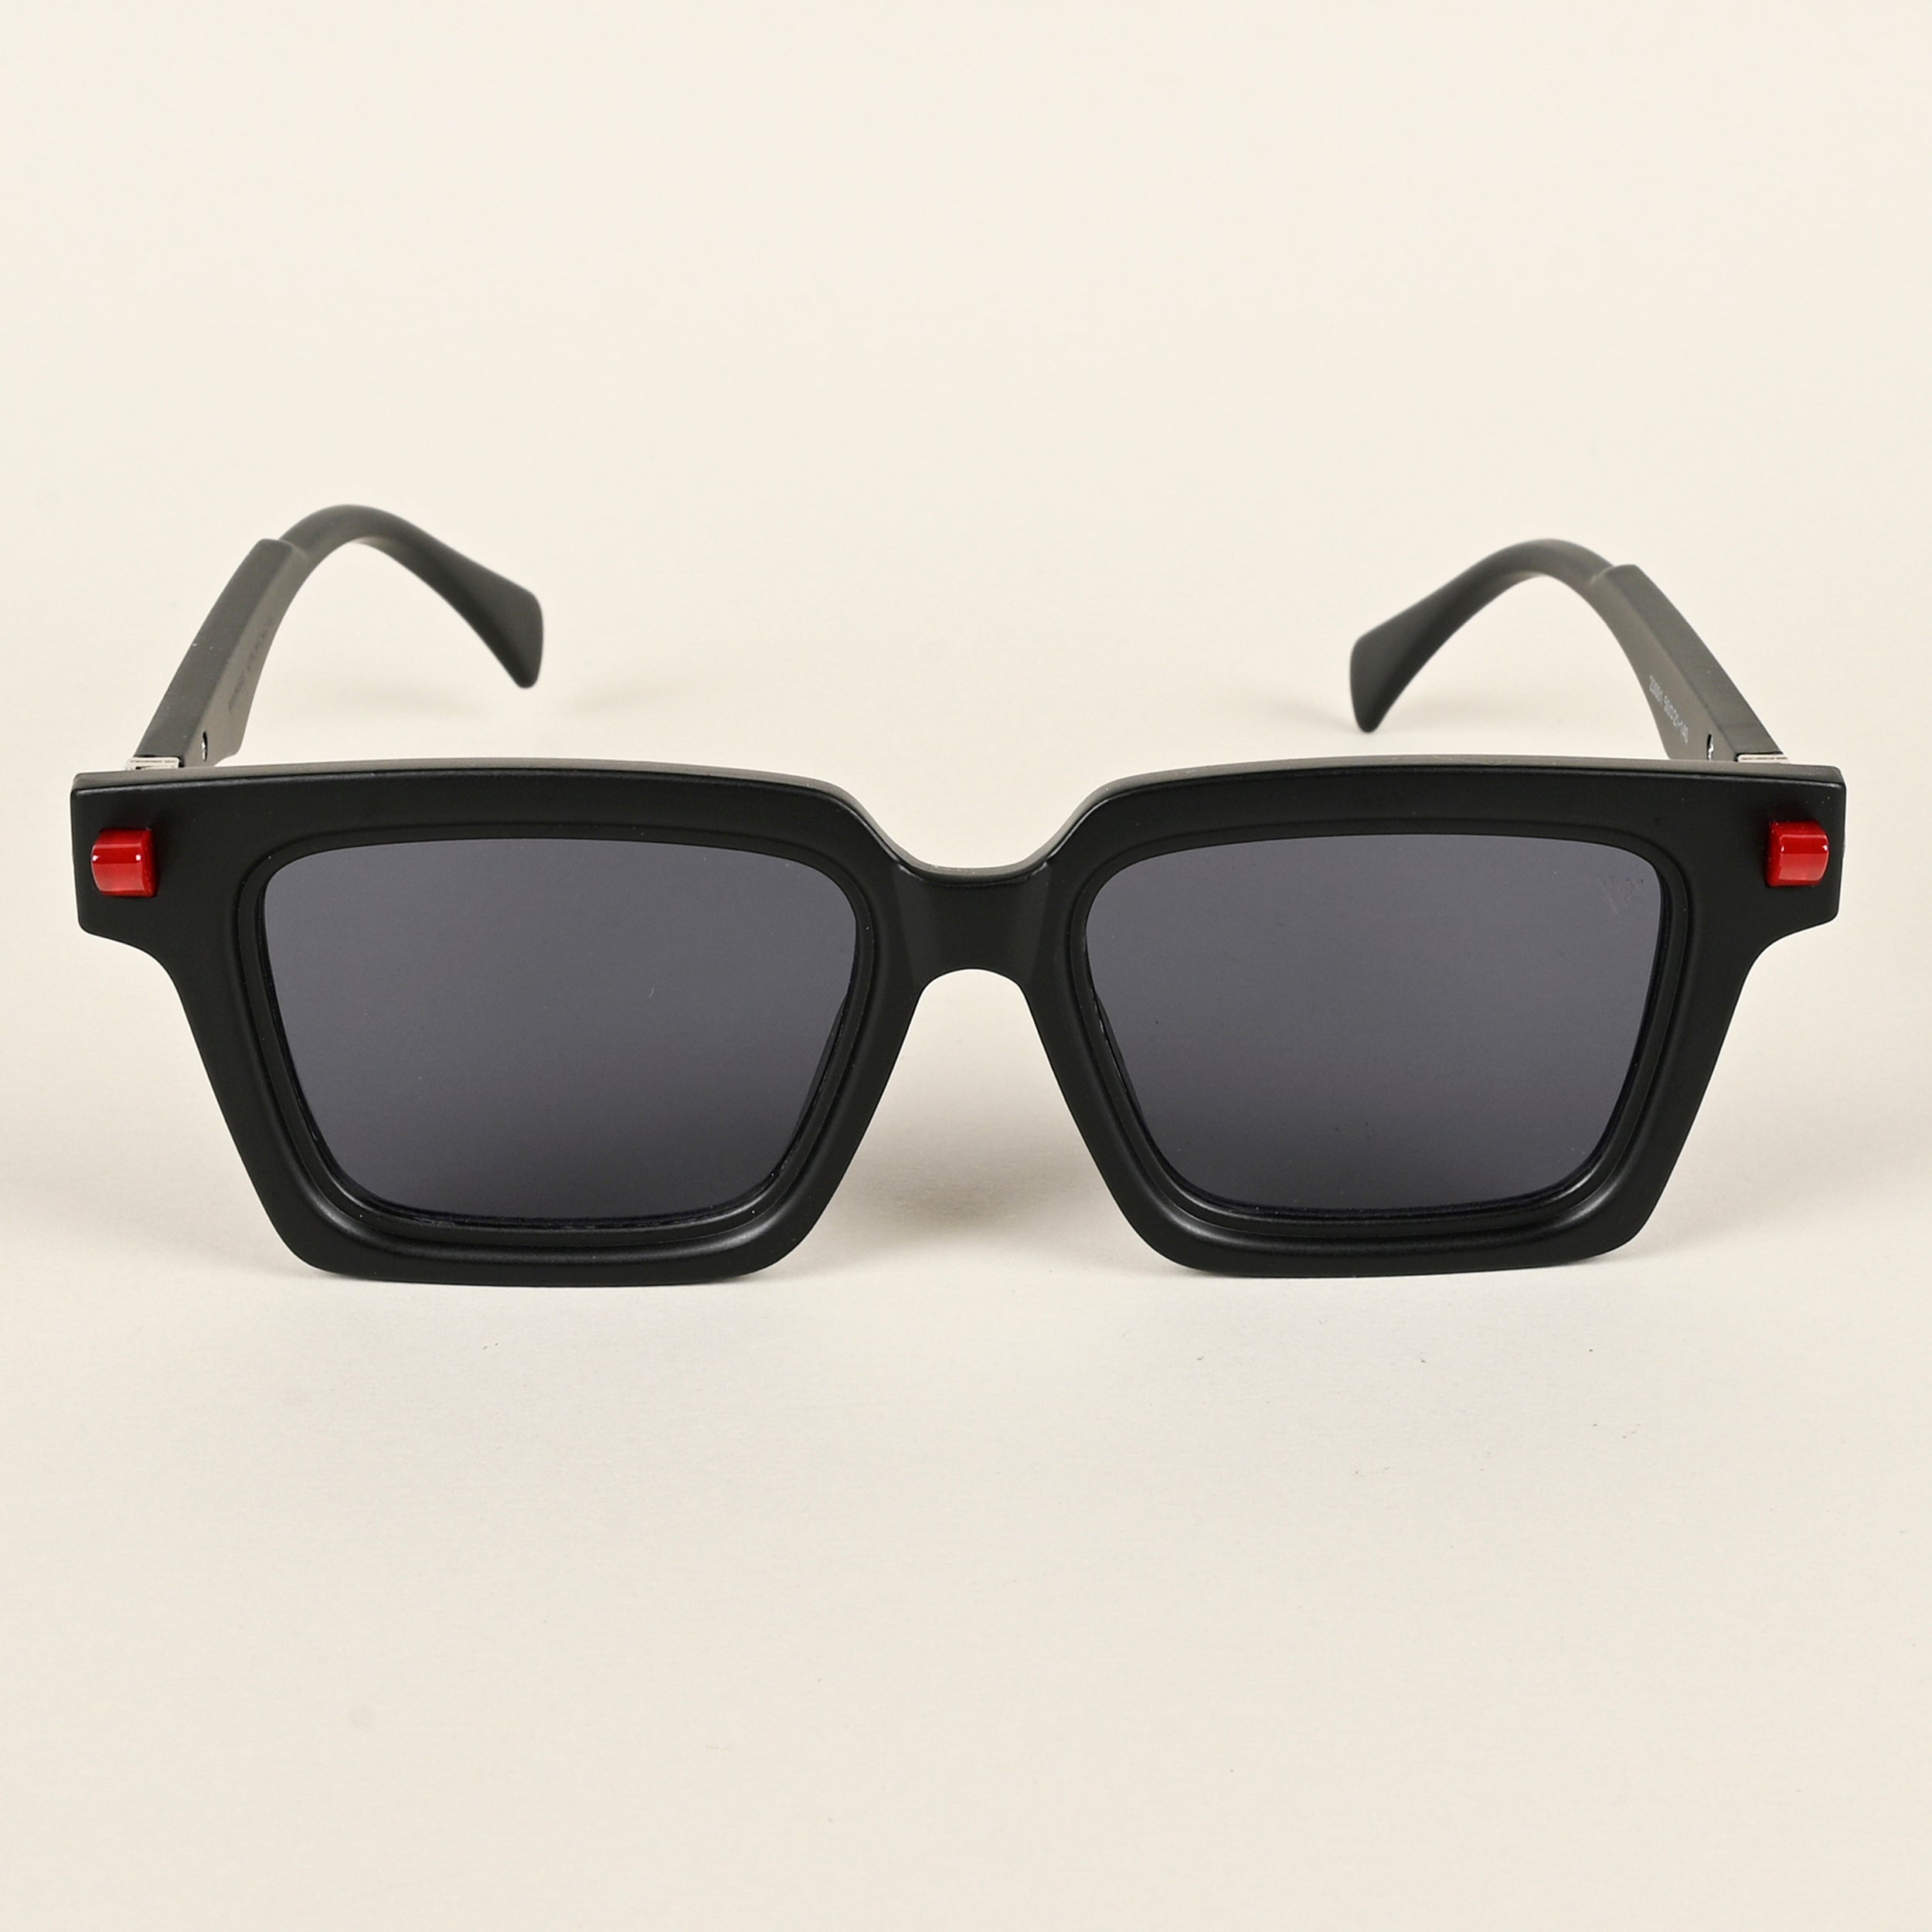 Voyage Matt Black Square Sunglasses for Men & Women - MG4876